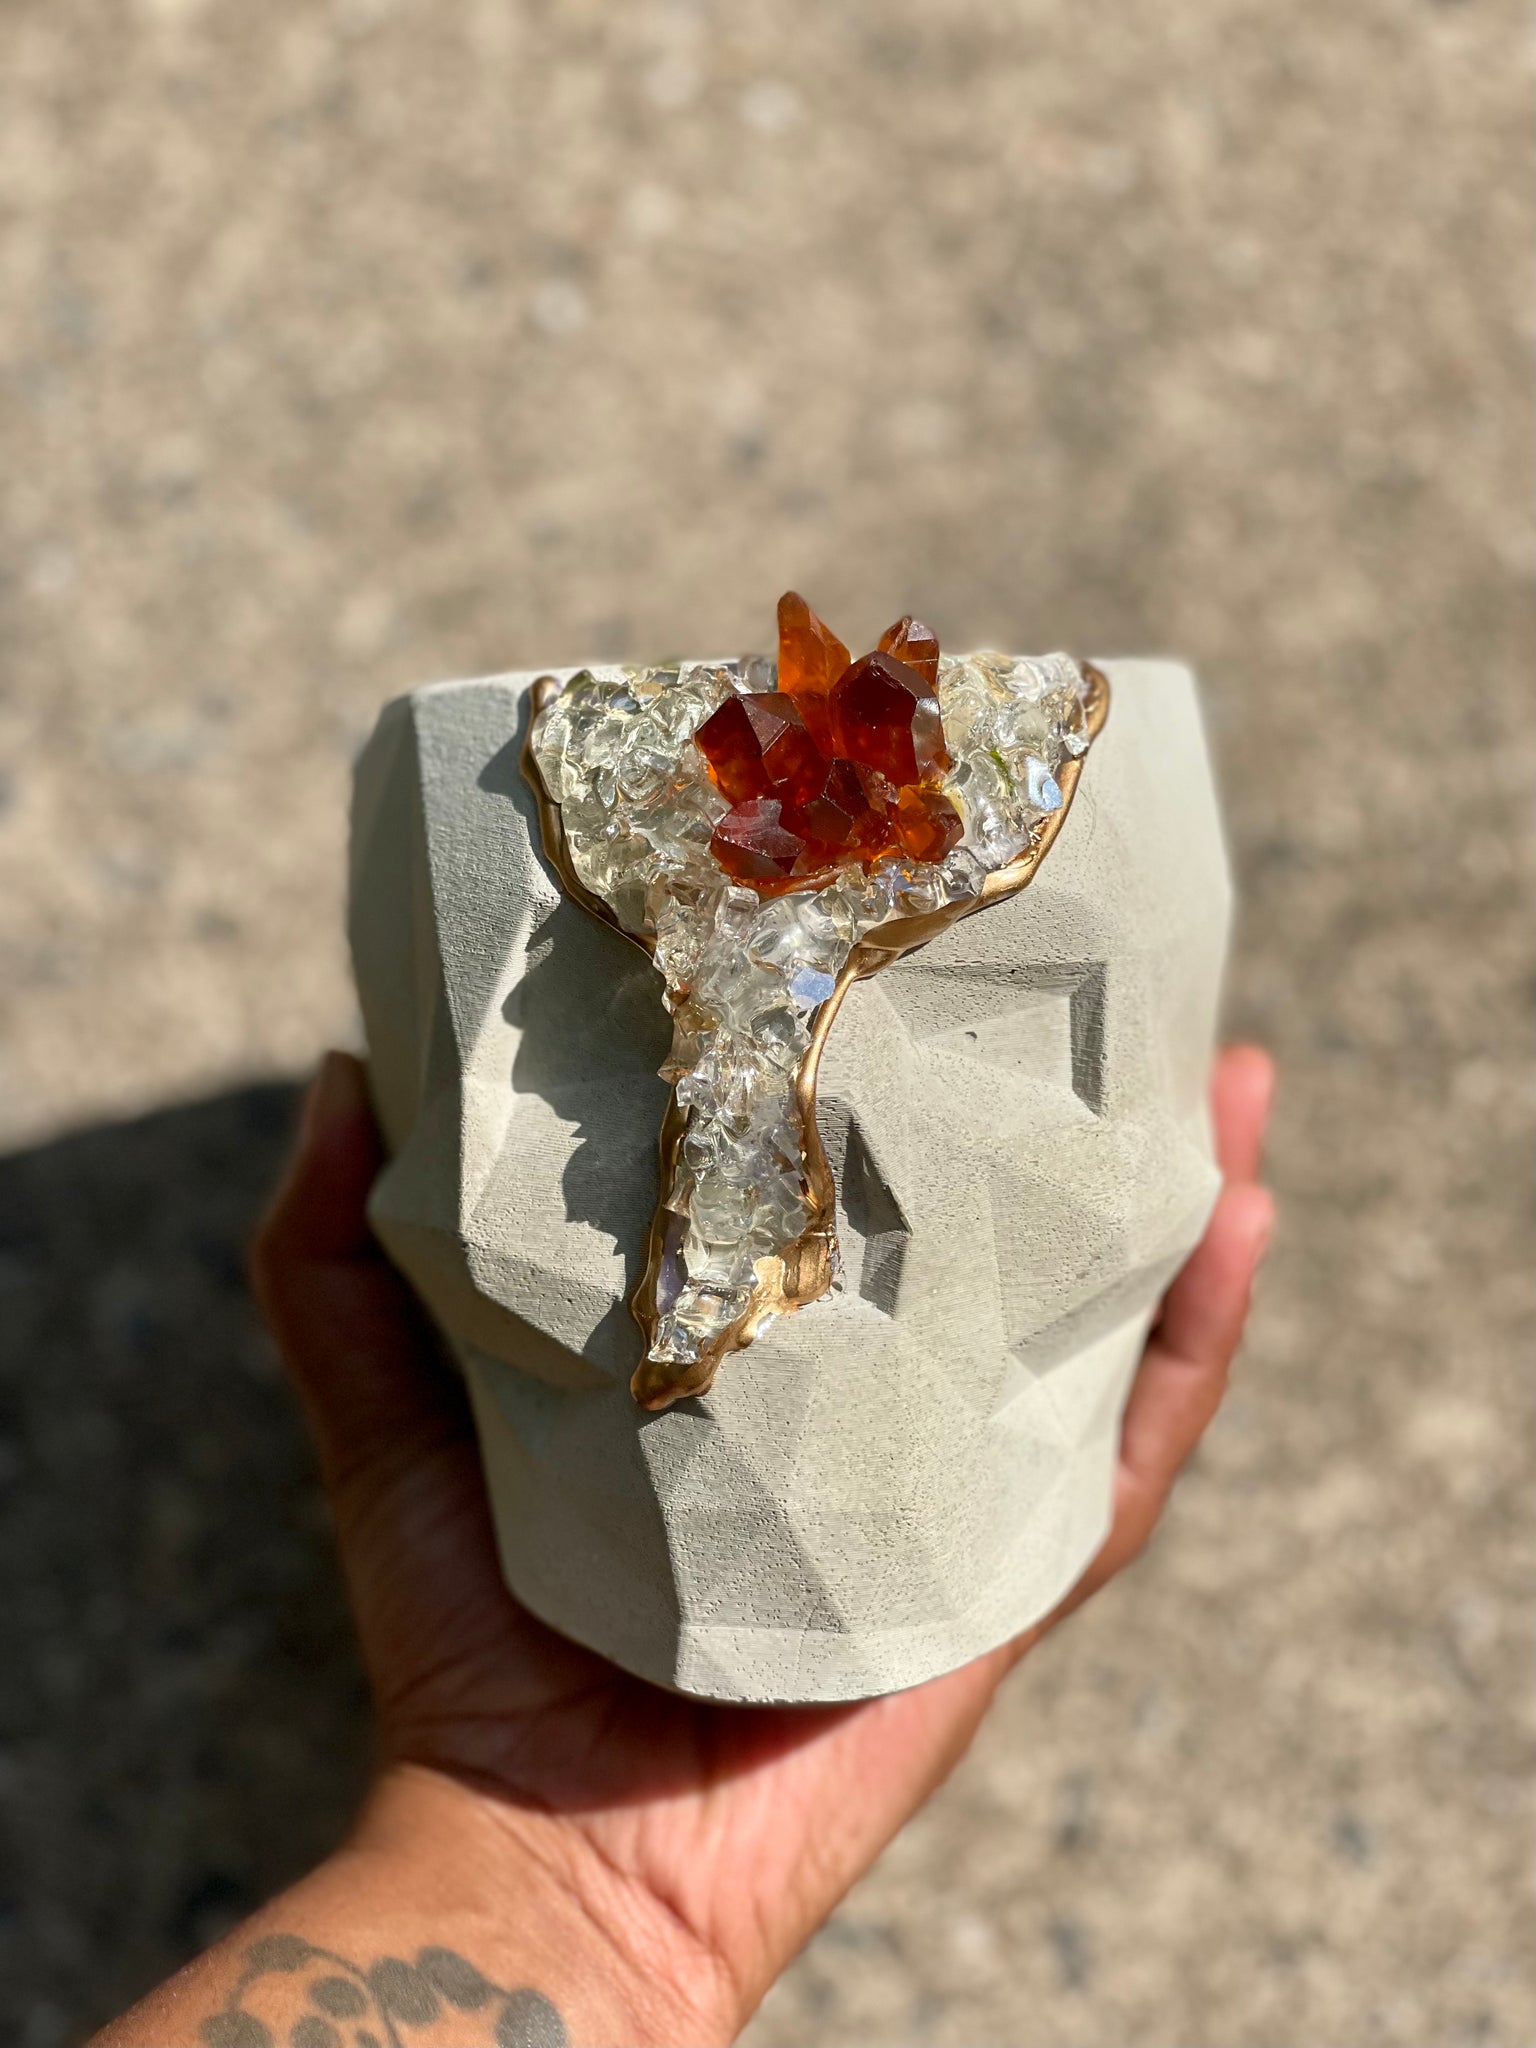 Geode Victor stone white amber geode